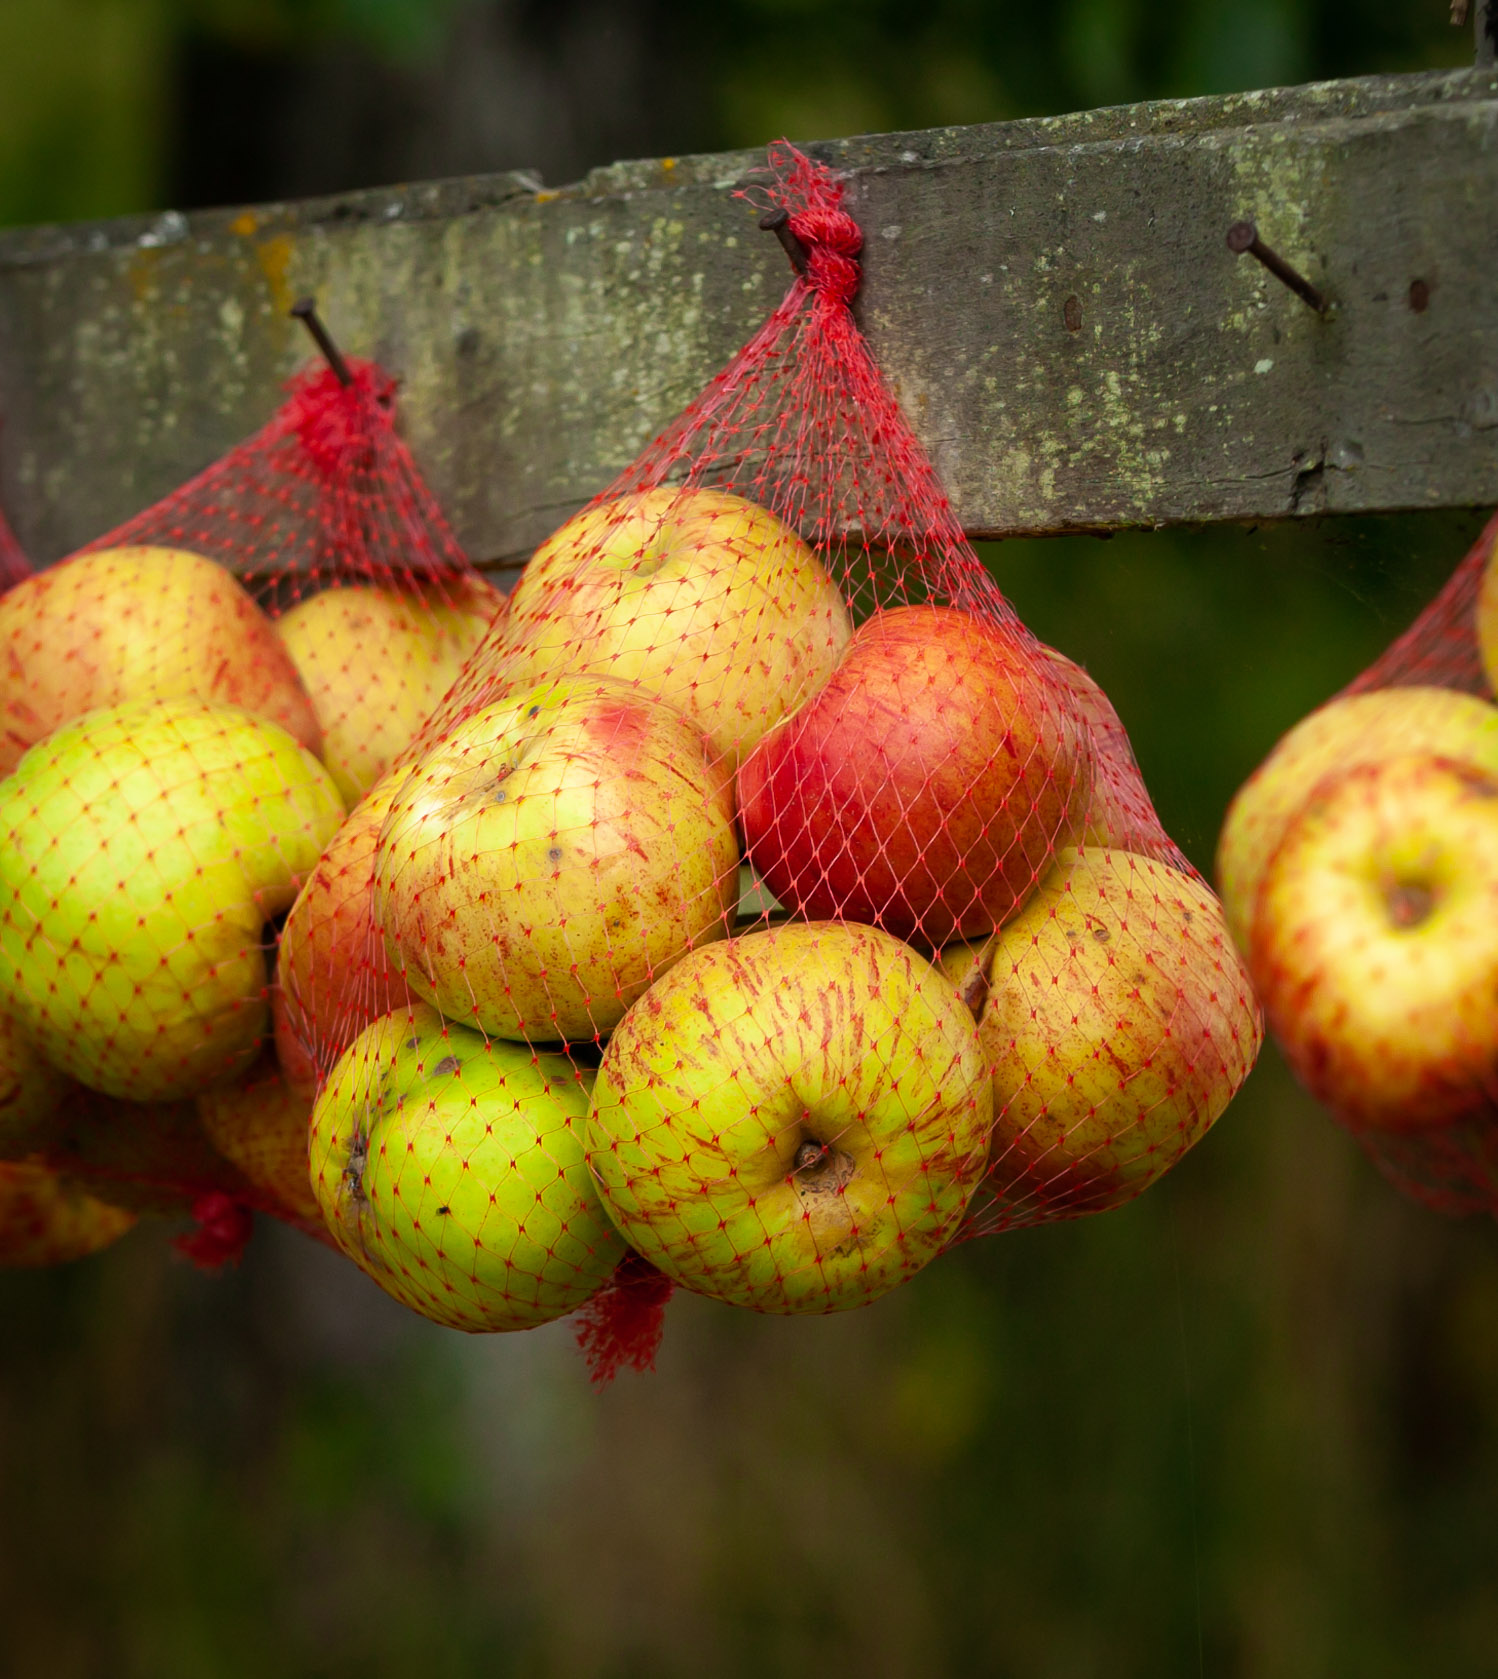 Fall apples